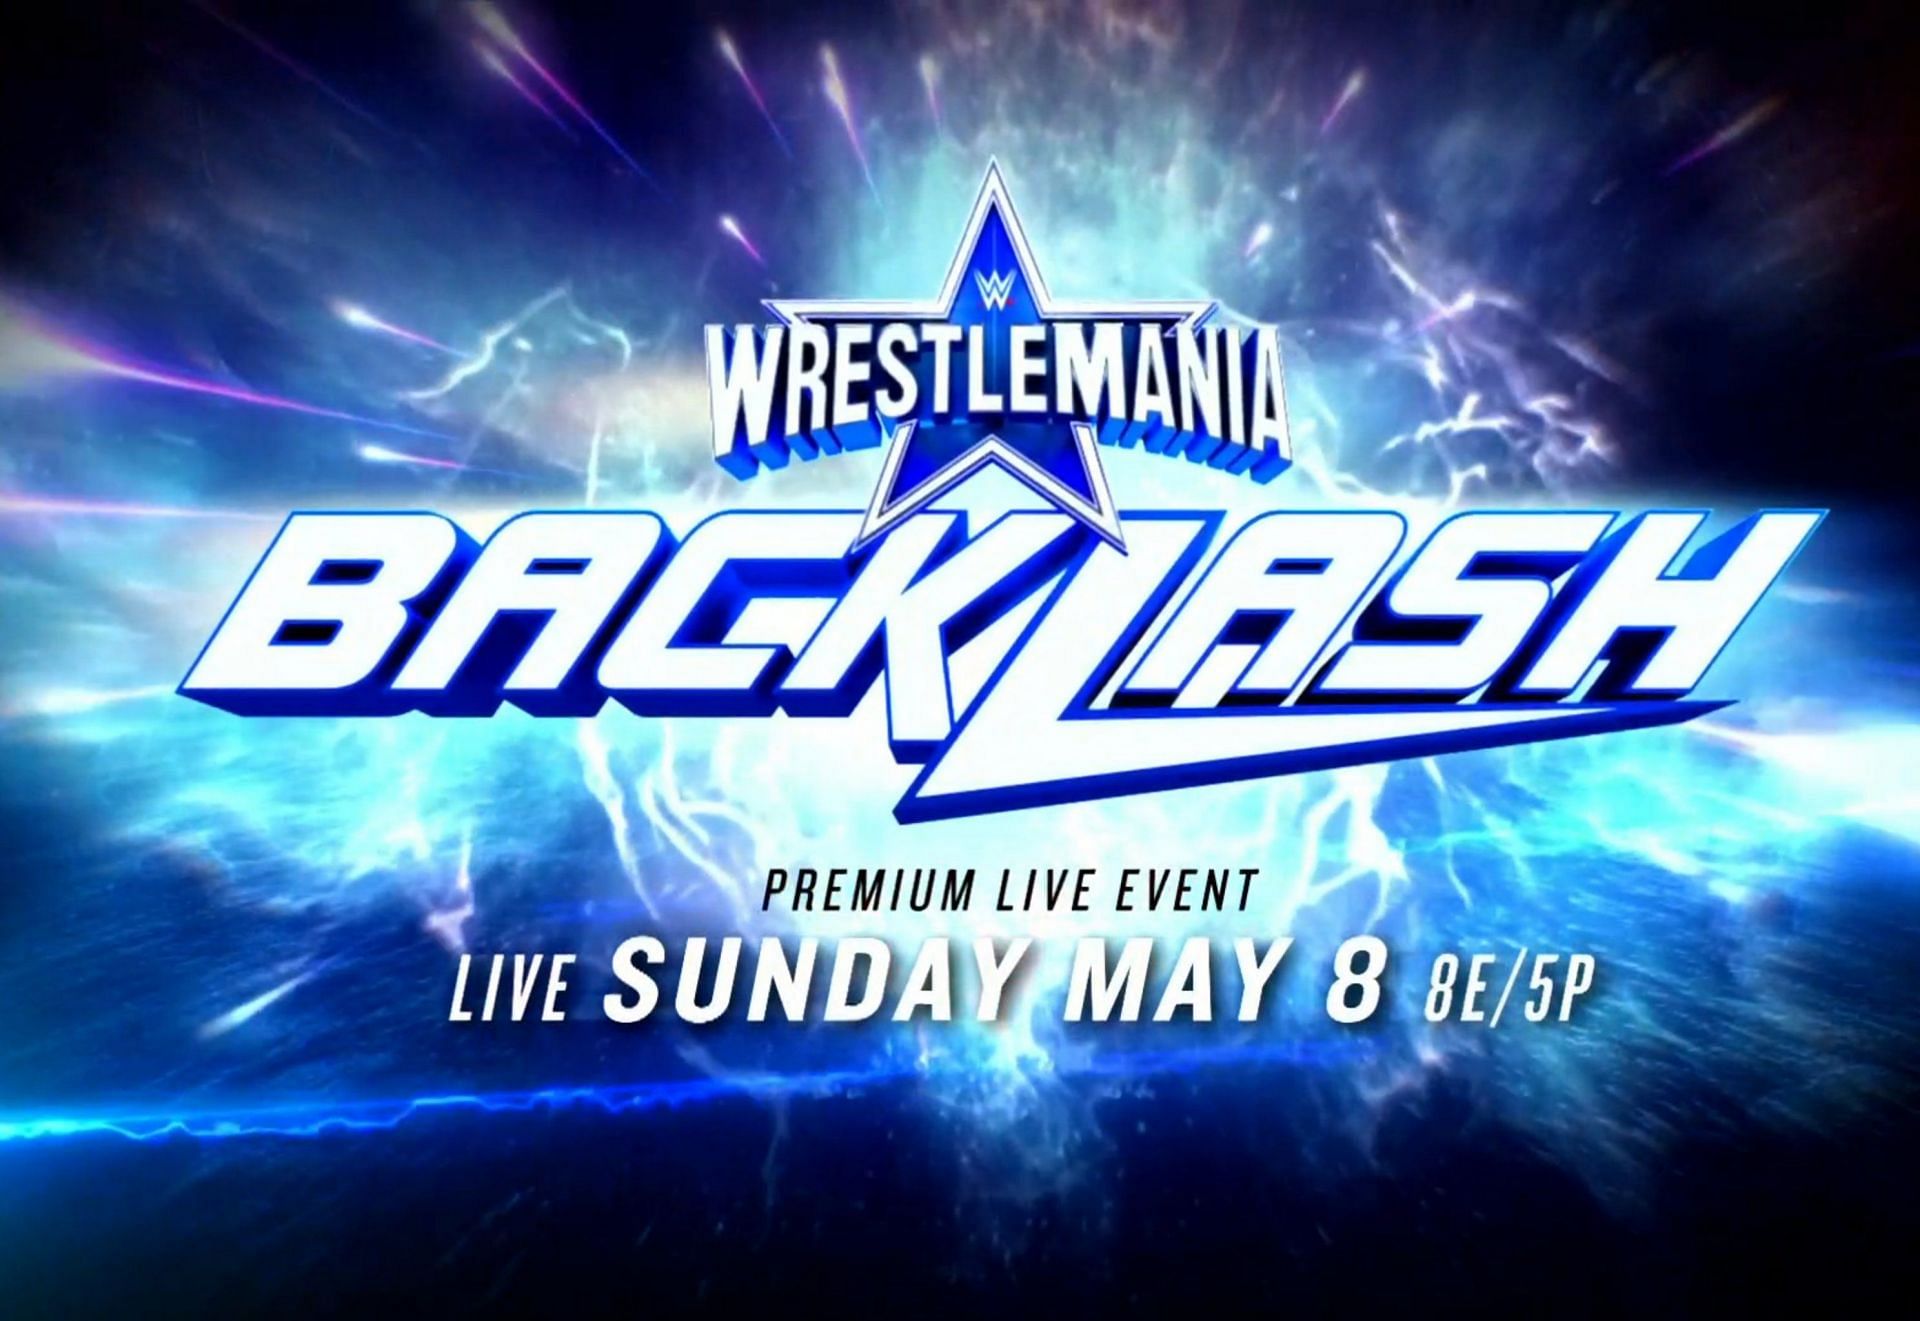 WrestleMania Backlash will take place on Sunday, May 8.